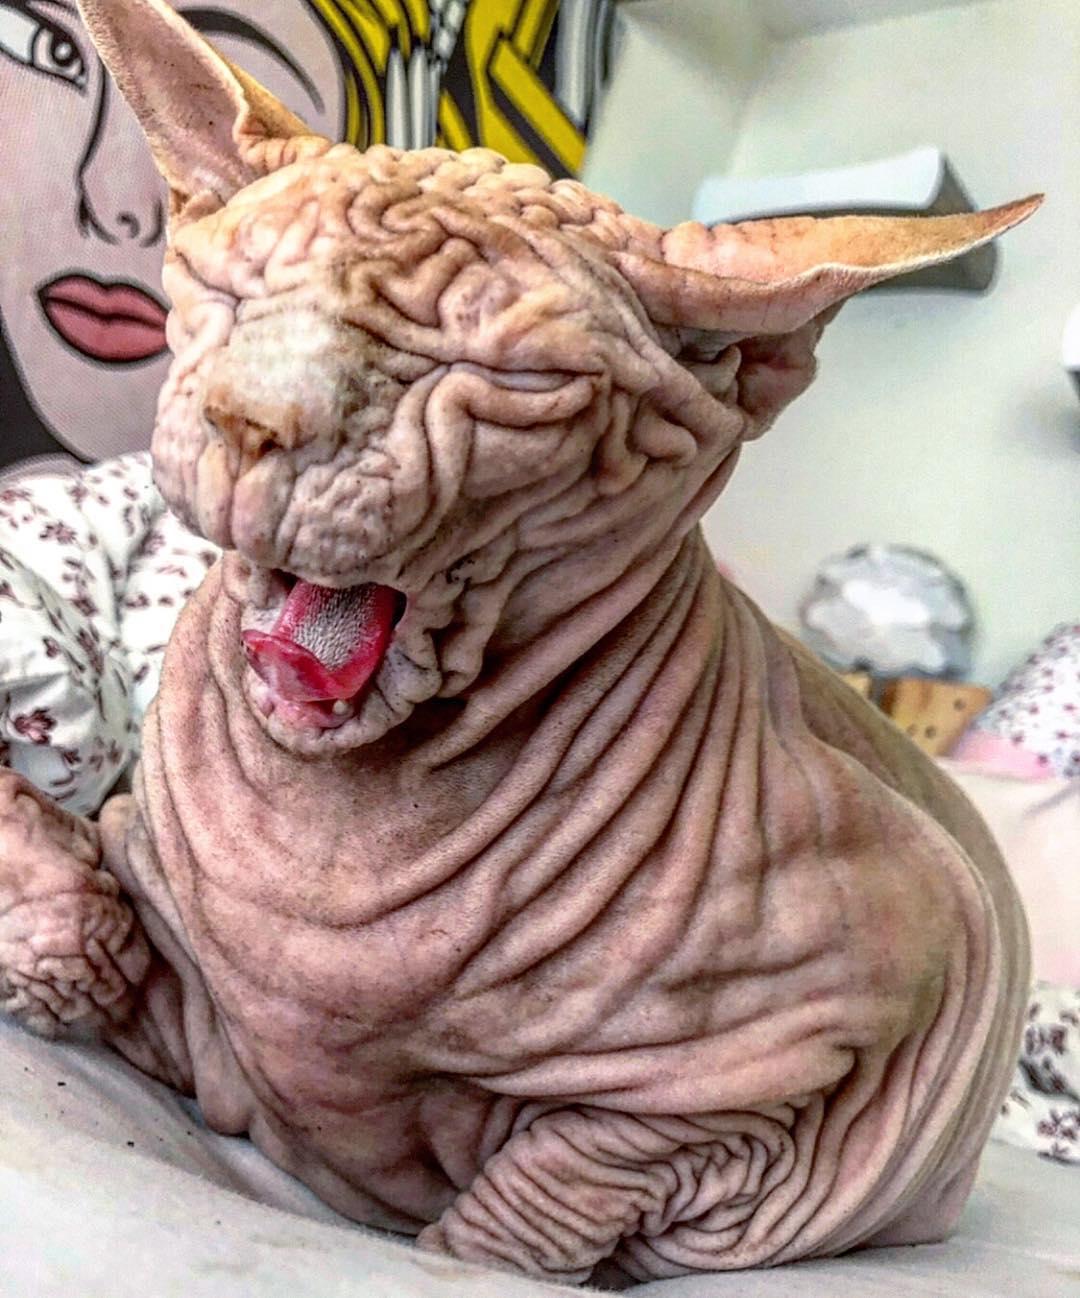 (Courtesy of <a href="https://www.xherdanthenakedcat.com/">Xherdan the naked Cat</a>)